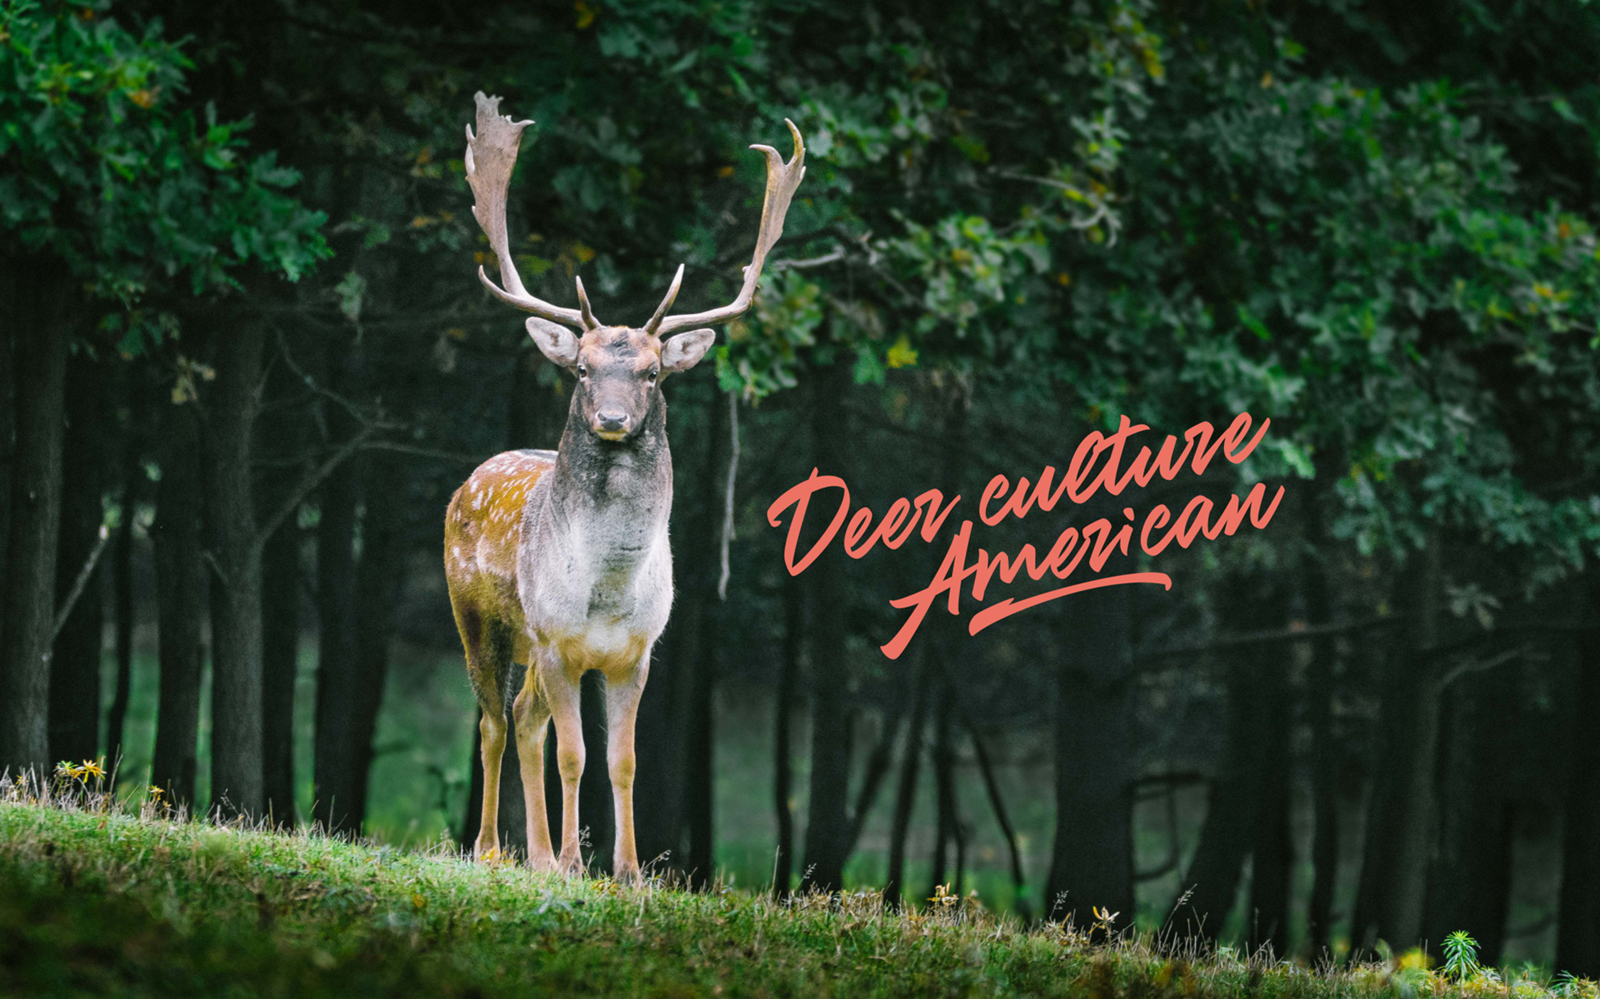 Deer Culture American